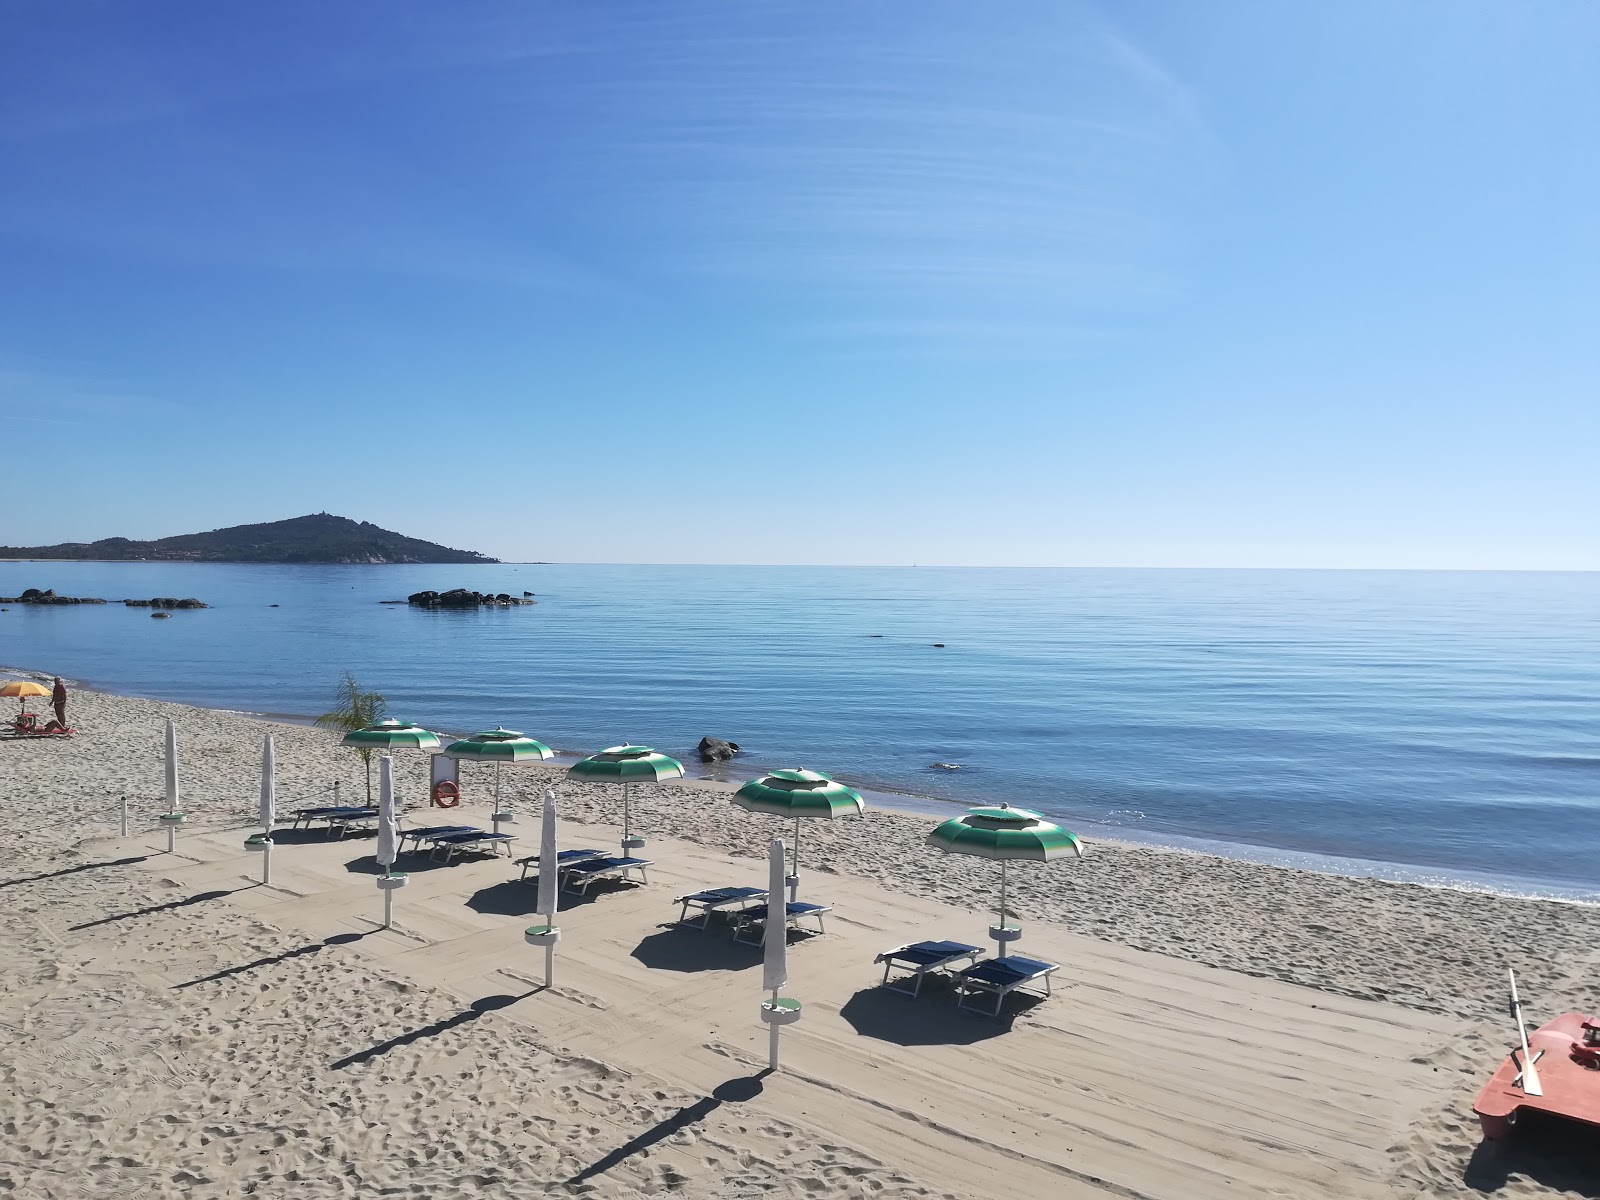 Foto av Spiaggia del Lido di Orri med hög nivå av renlighet